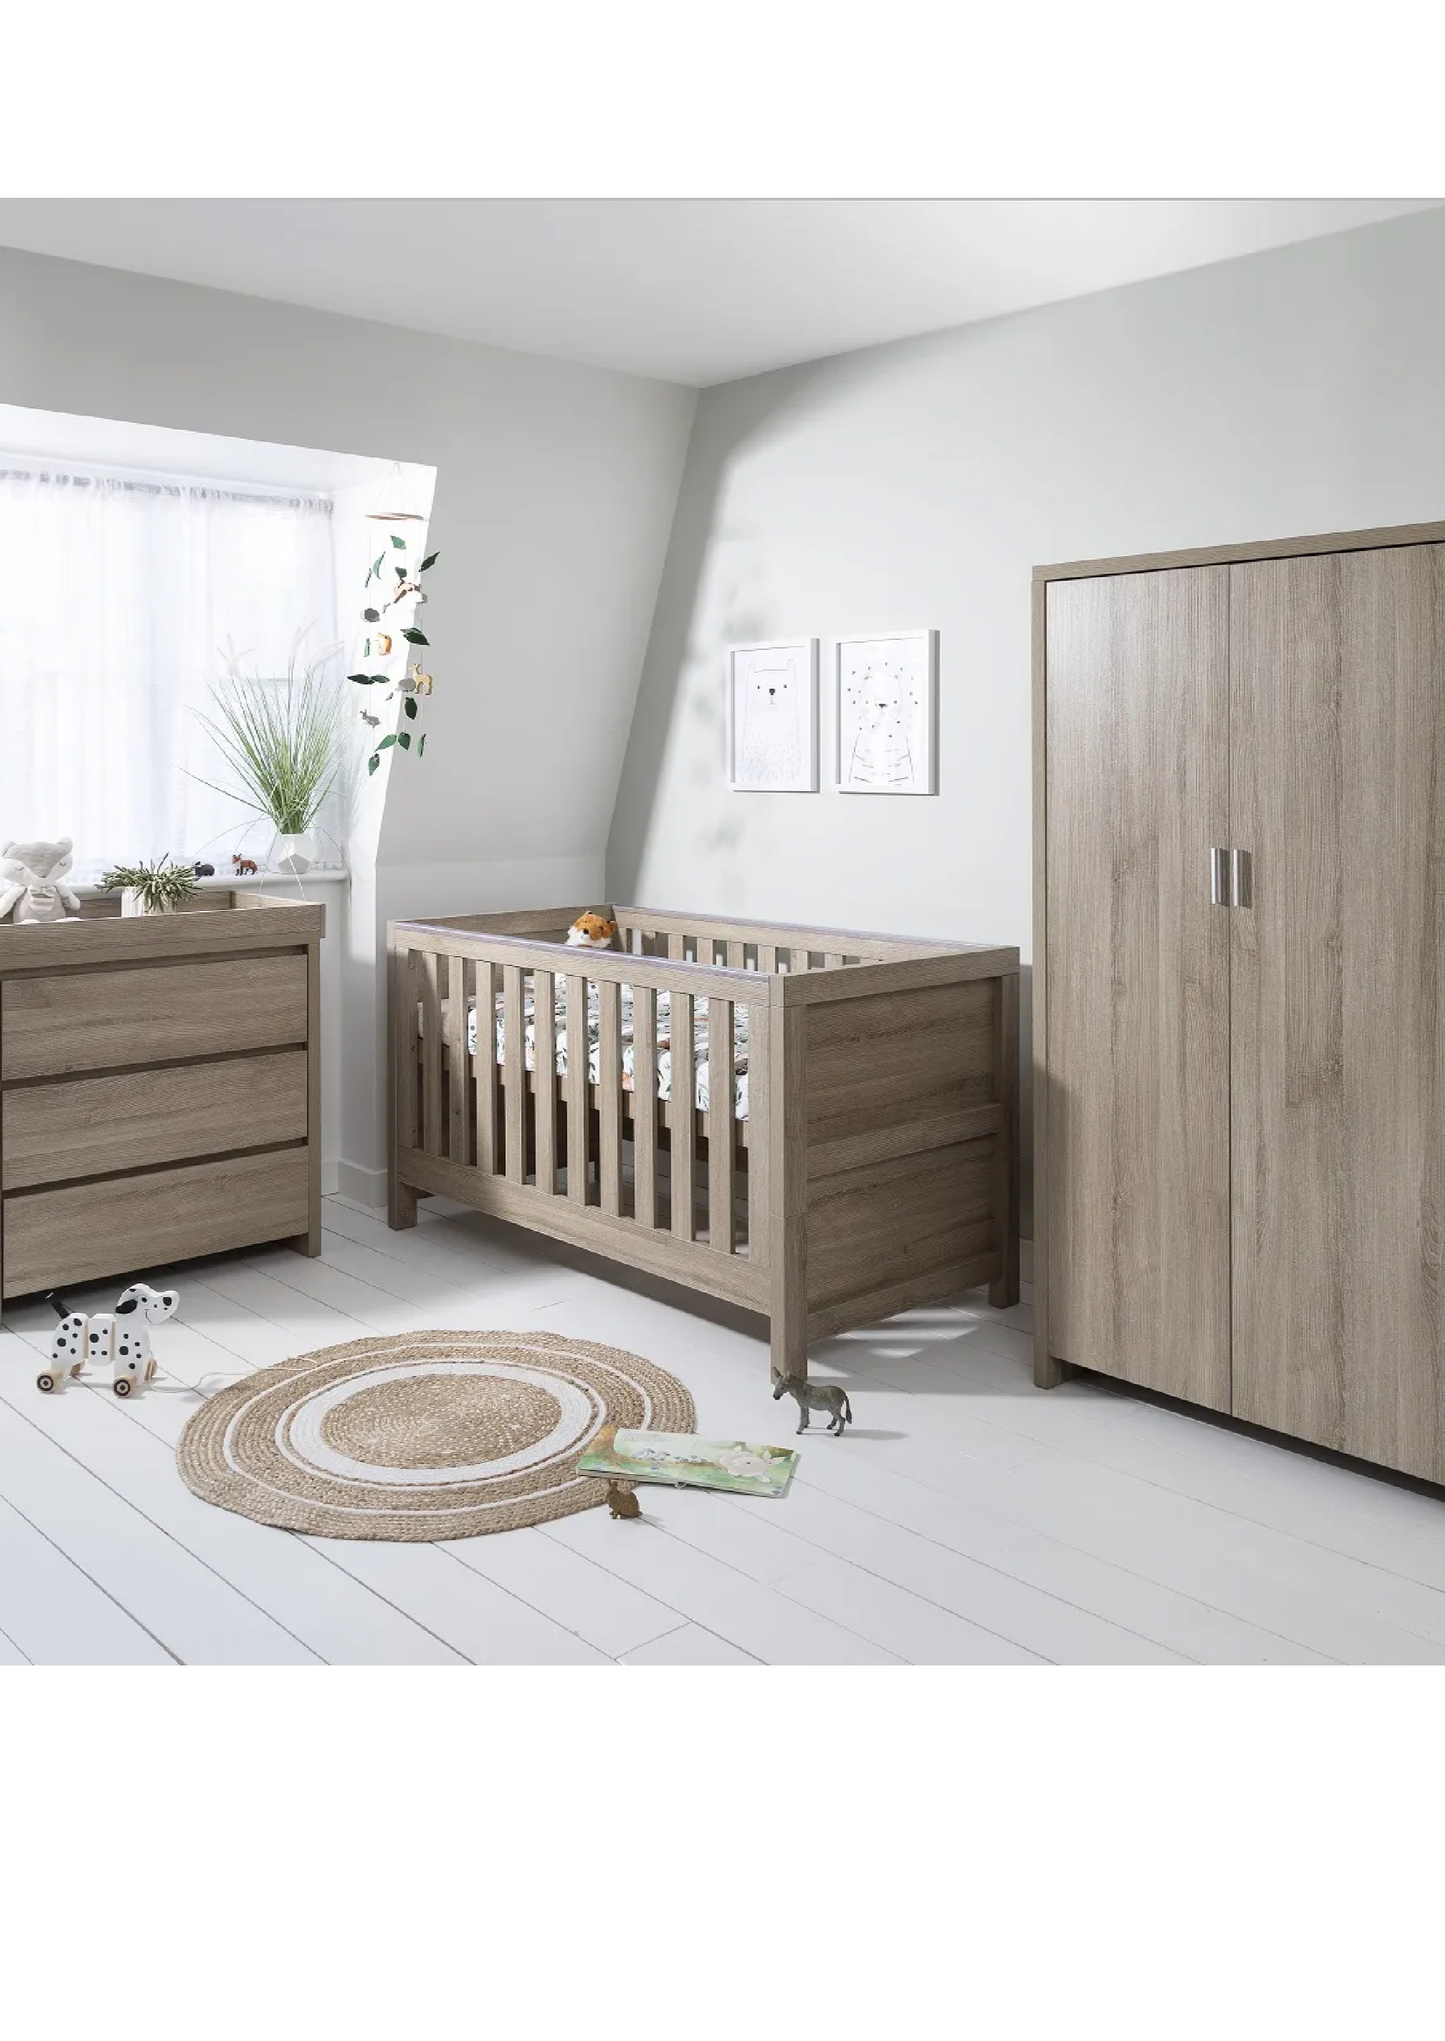 Tutti Bambini Modena 3 Piece Nursery Furniture Set